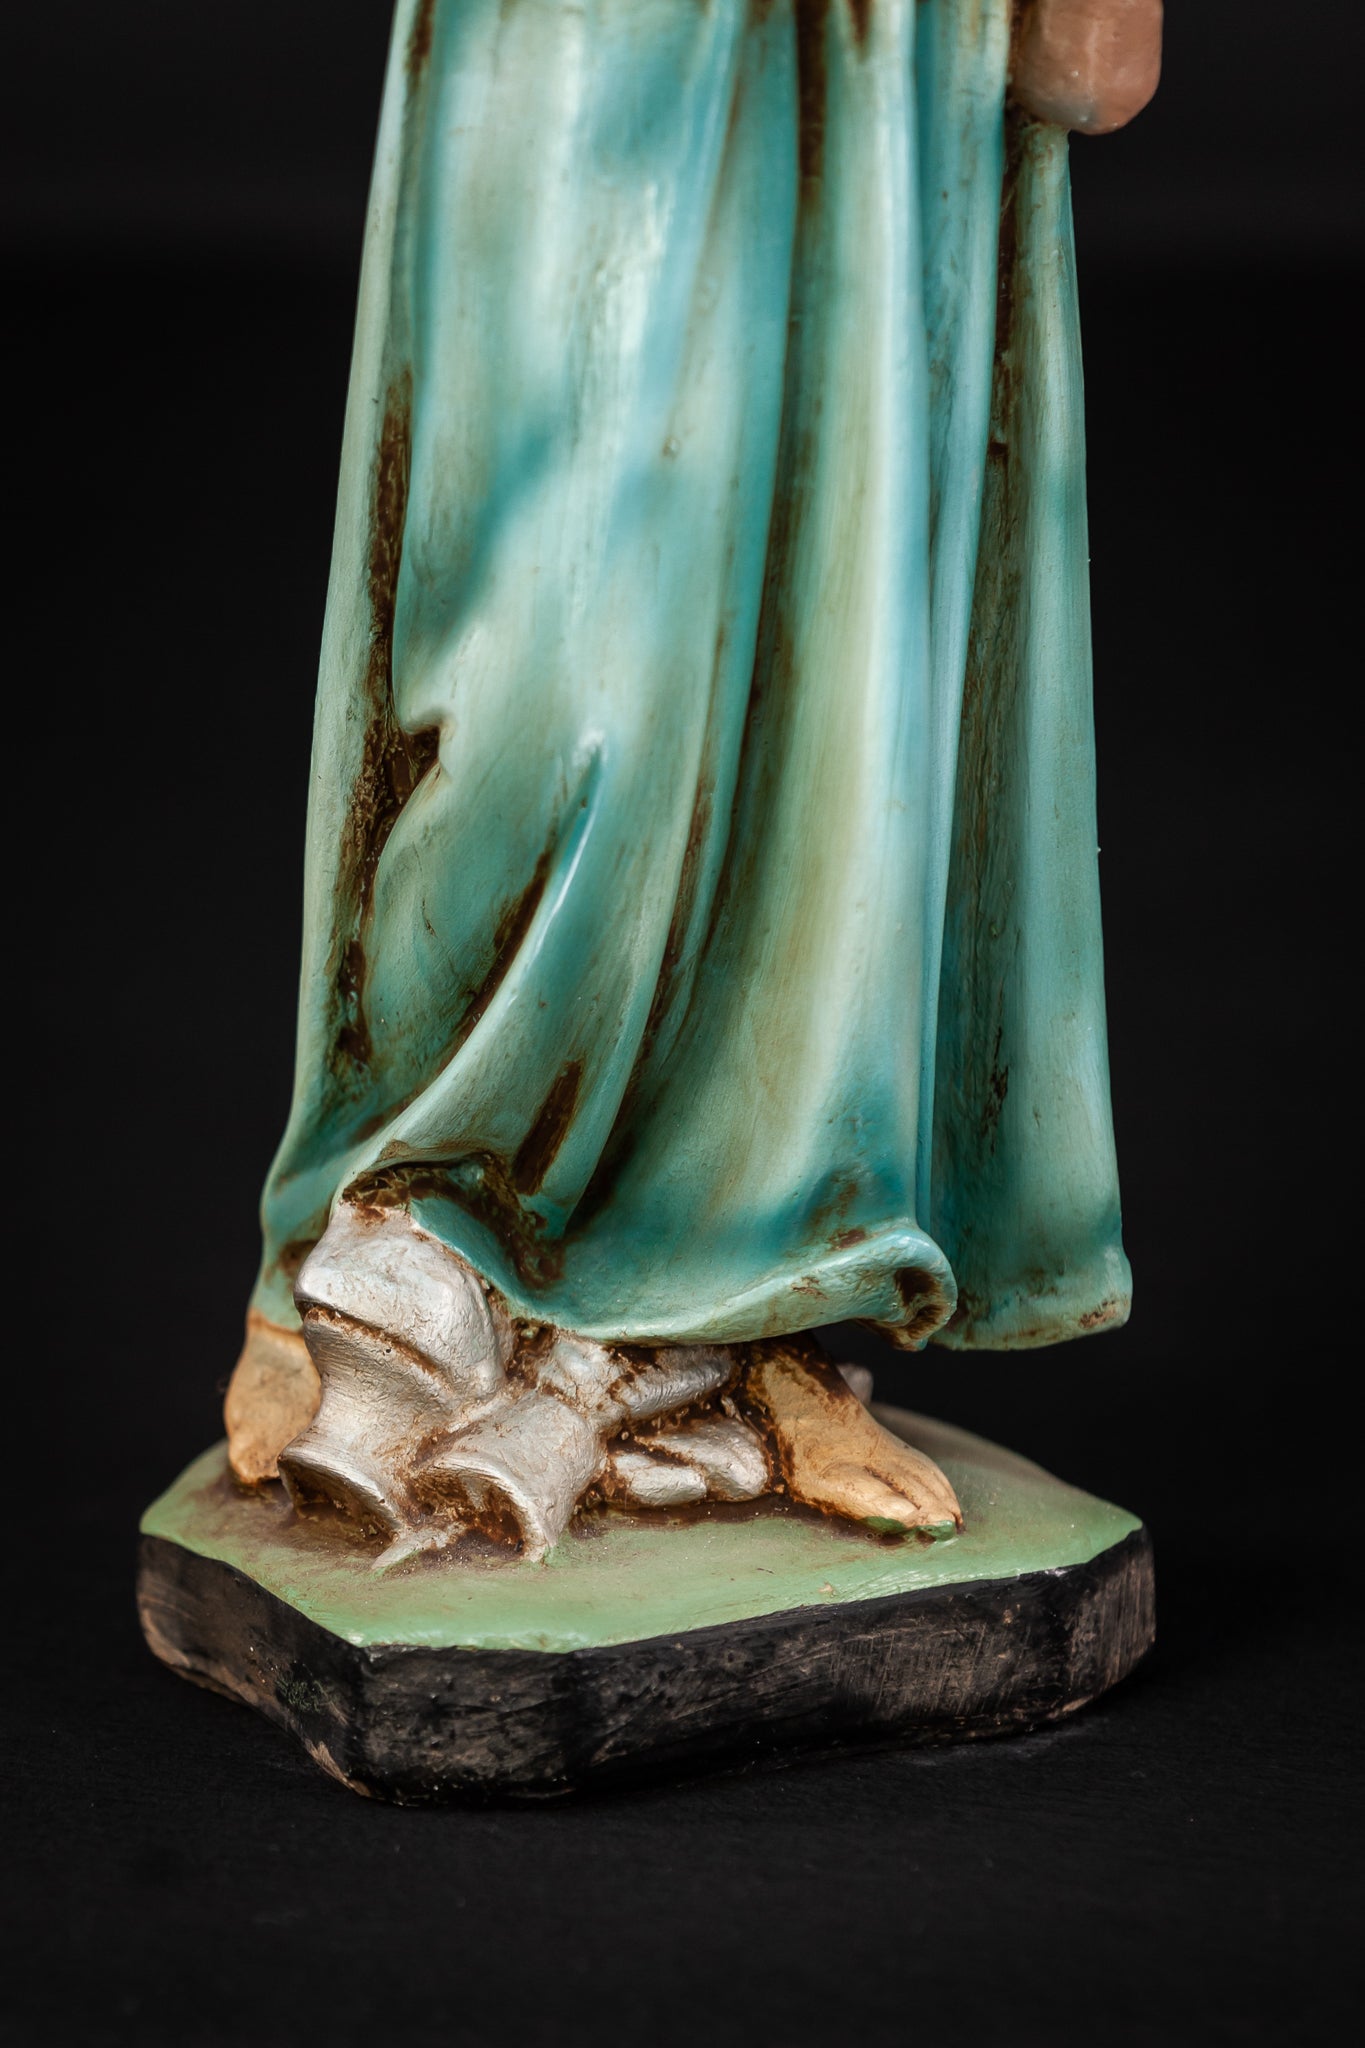 St Joan of Arc Plaster Statue | 16"